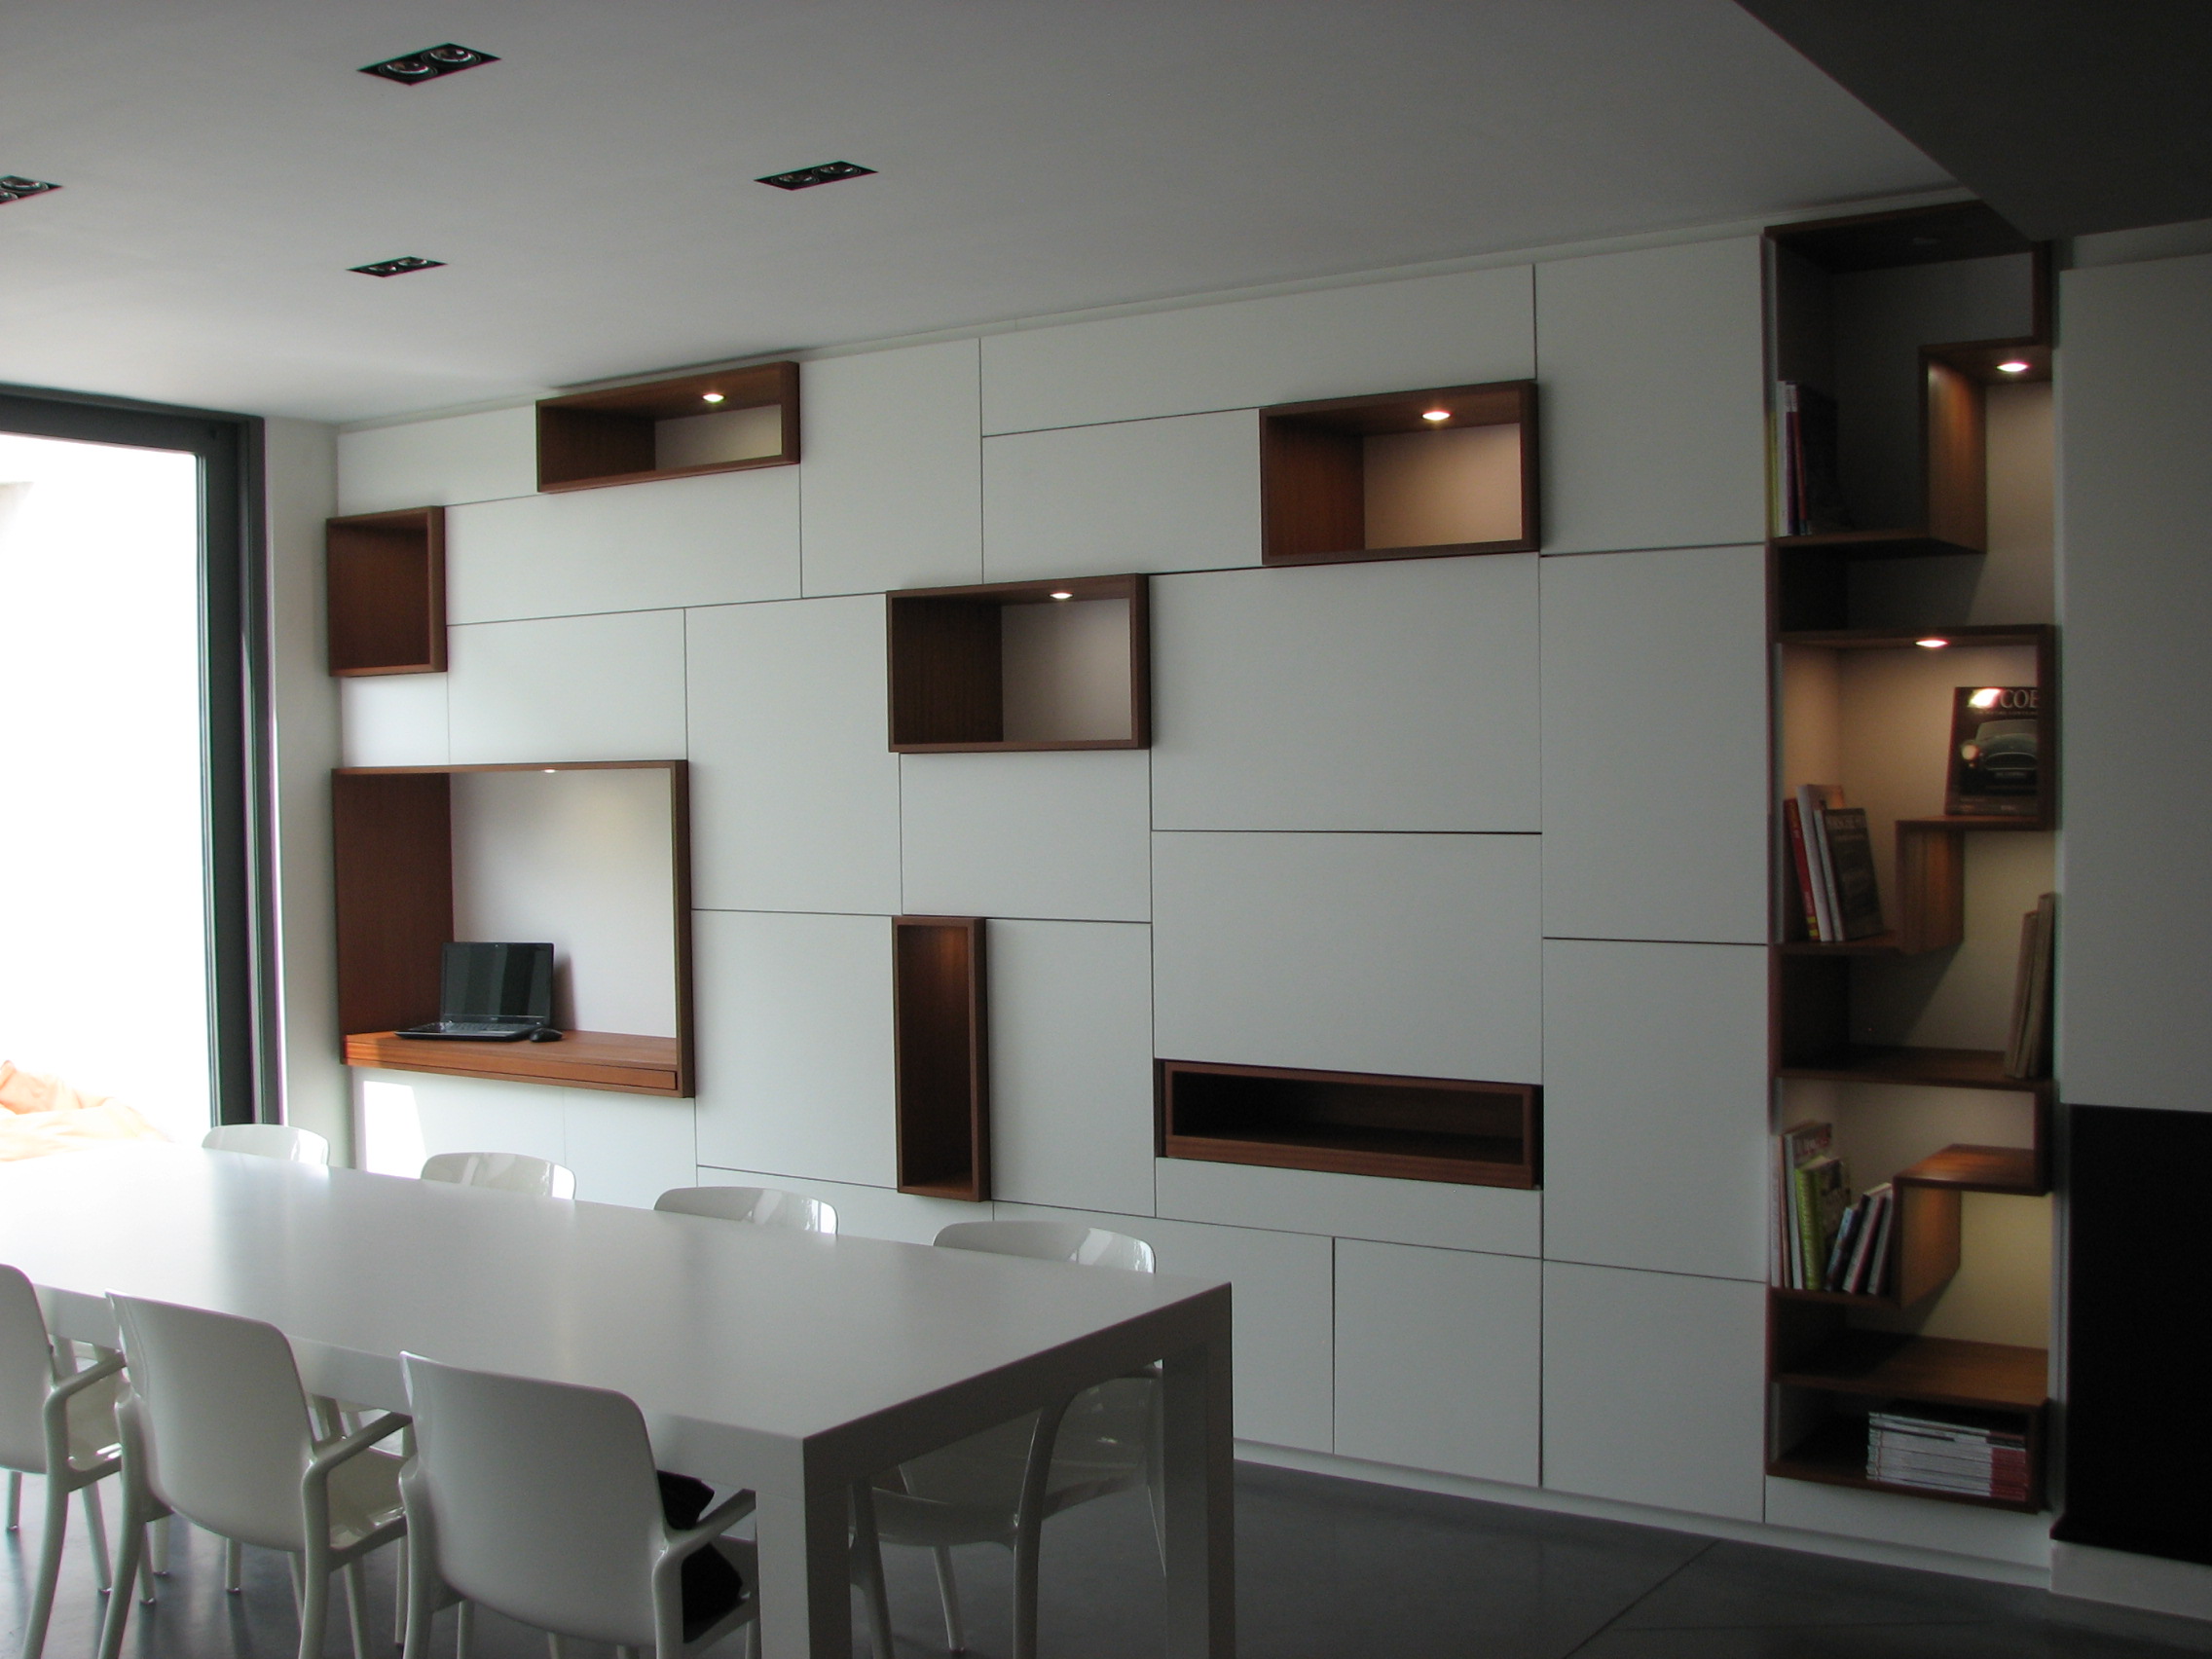 Tetrix - Julie Xhauflaire - Pièce de vie à Liège - #interior design #modern furniture